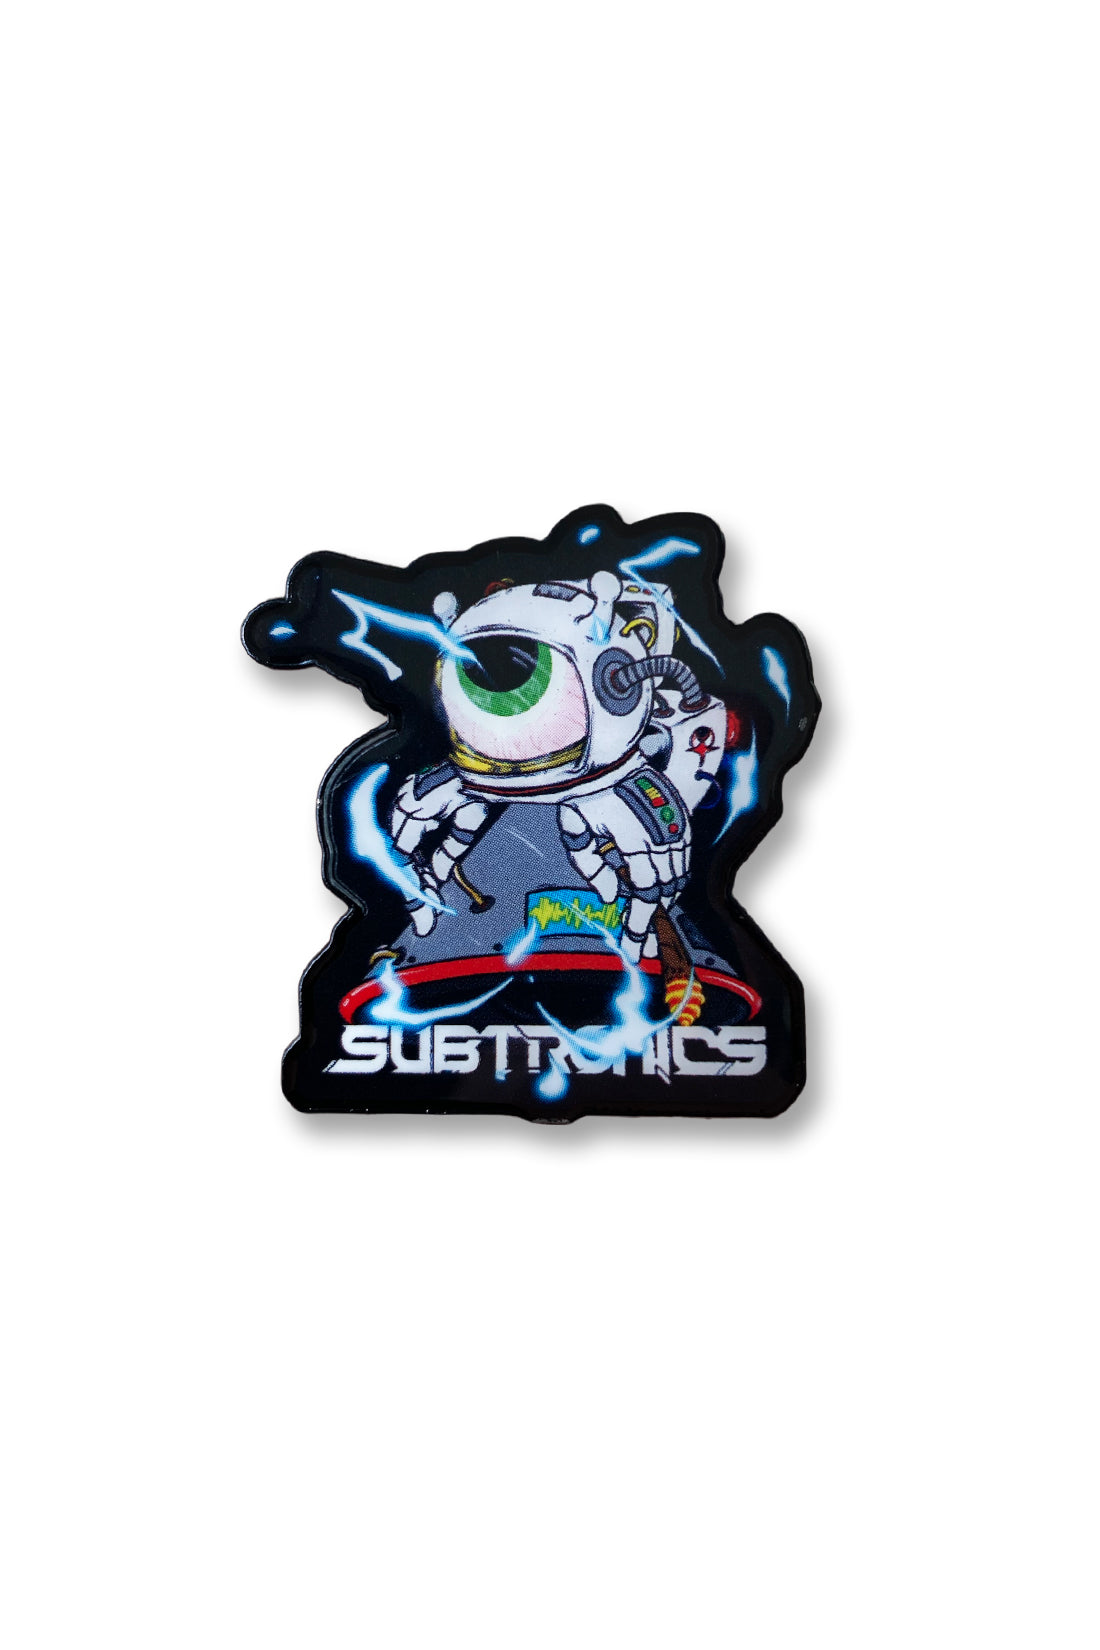 Subtronics - Astro Cyclops - Pin